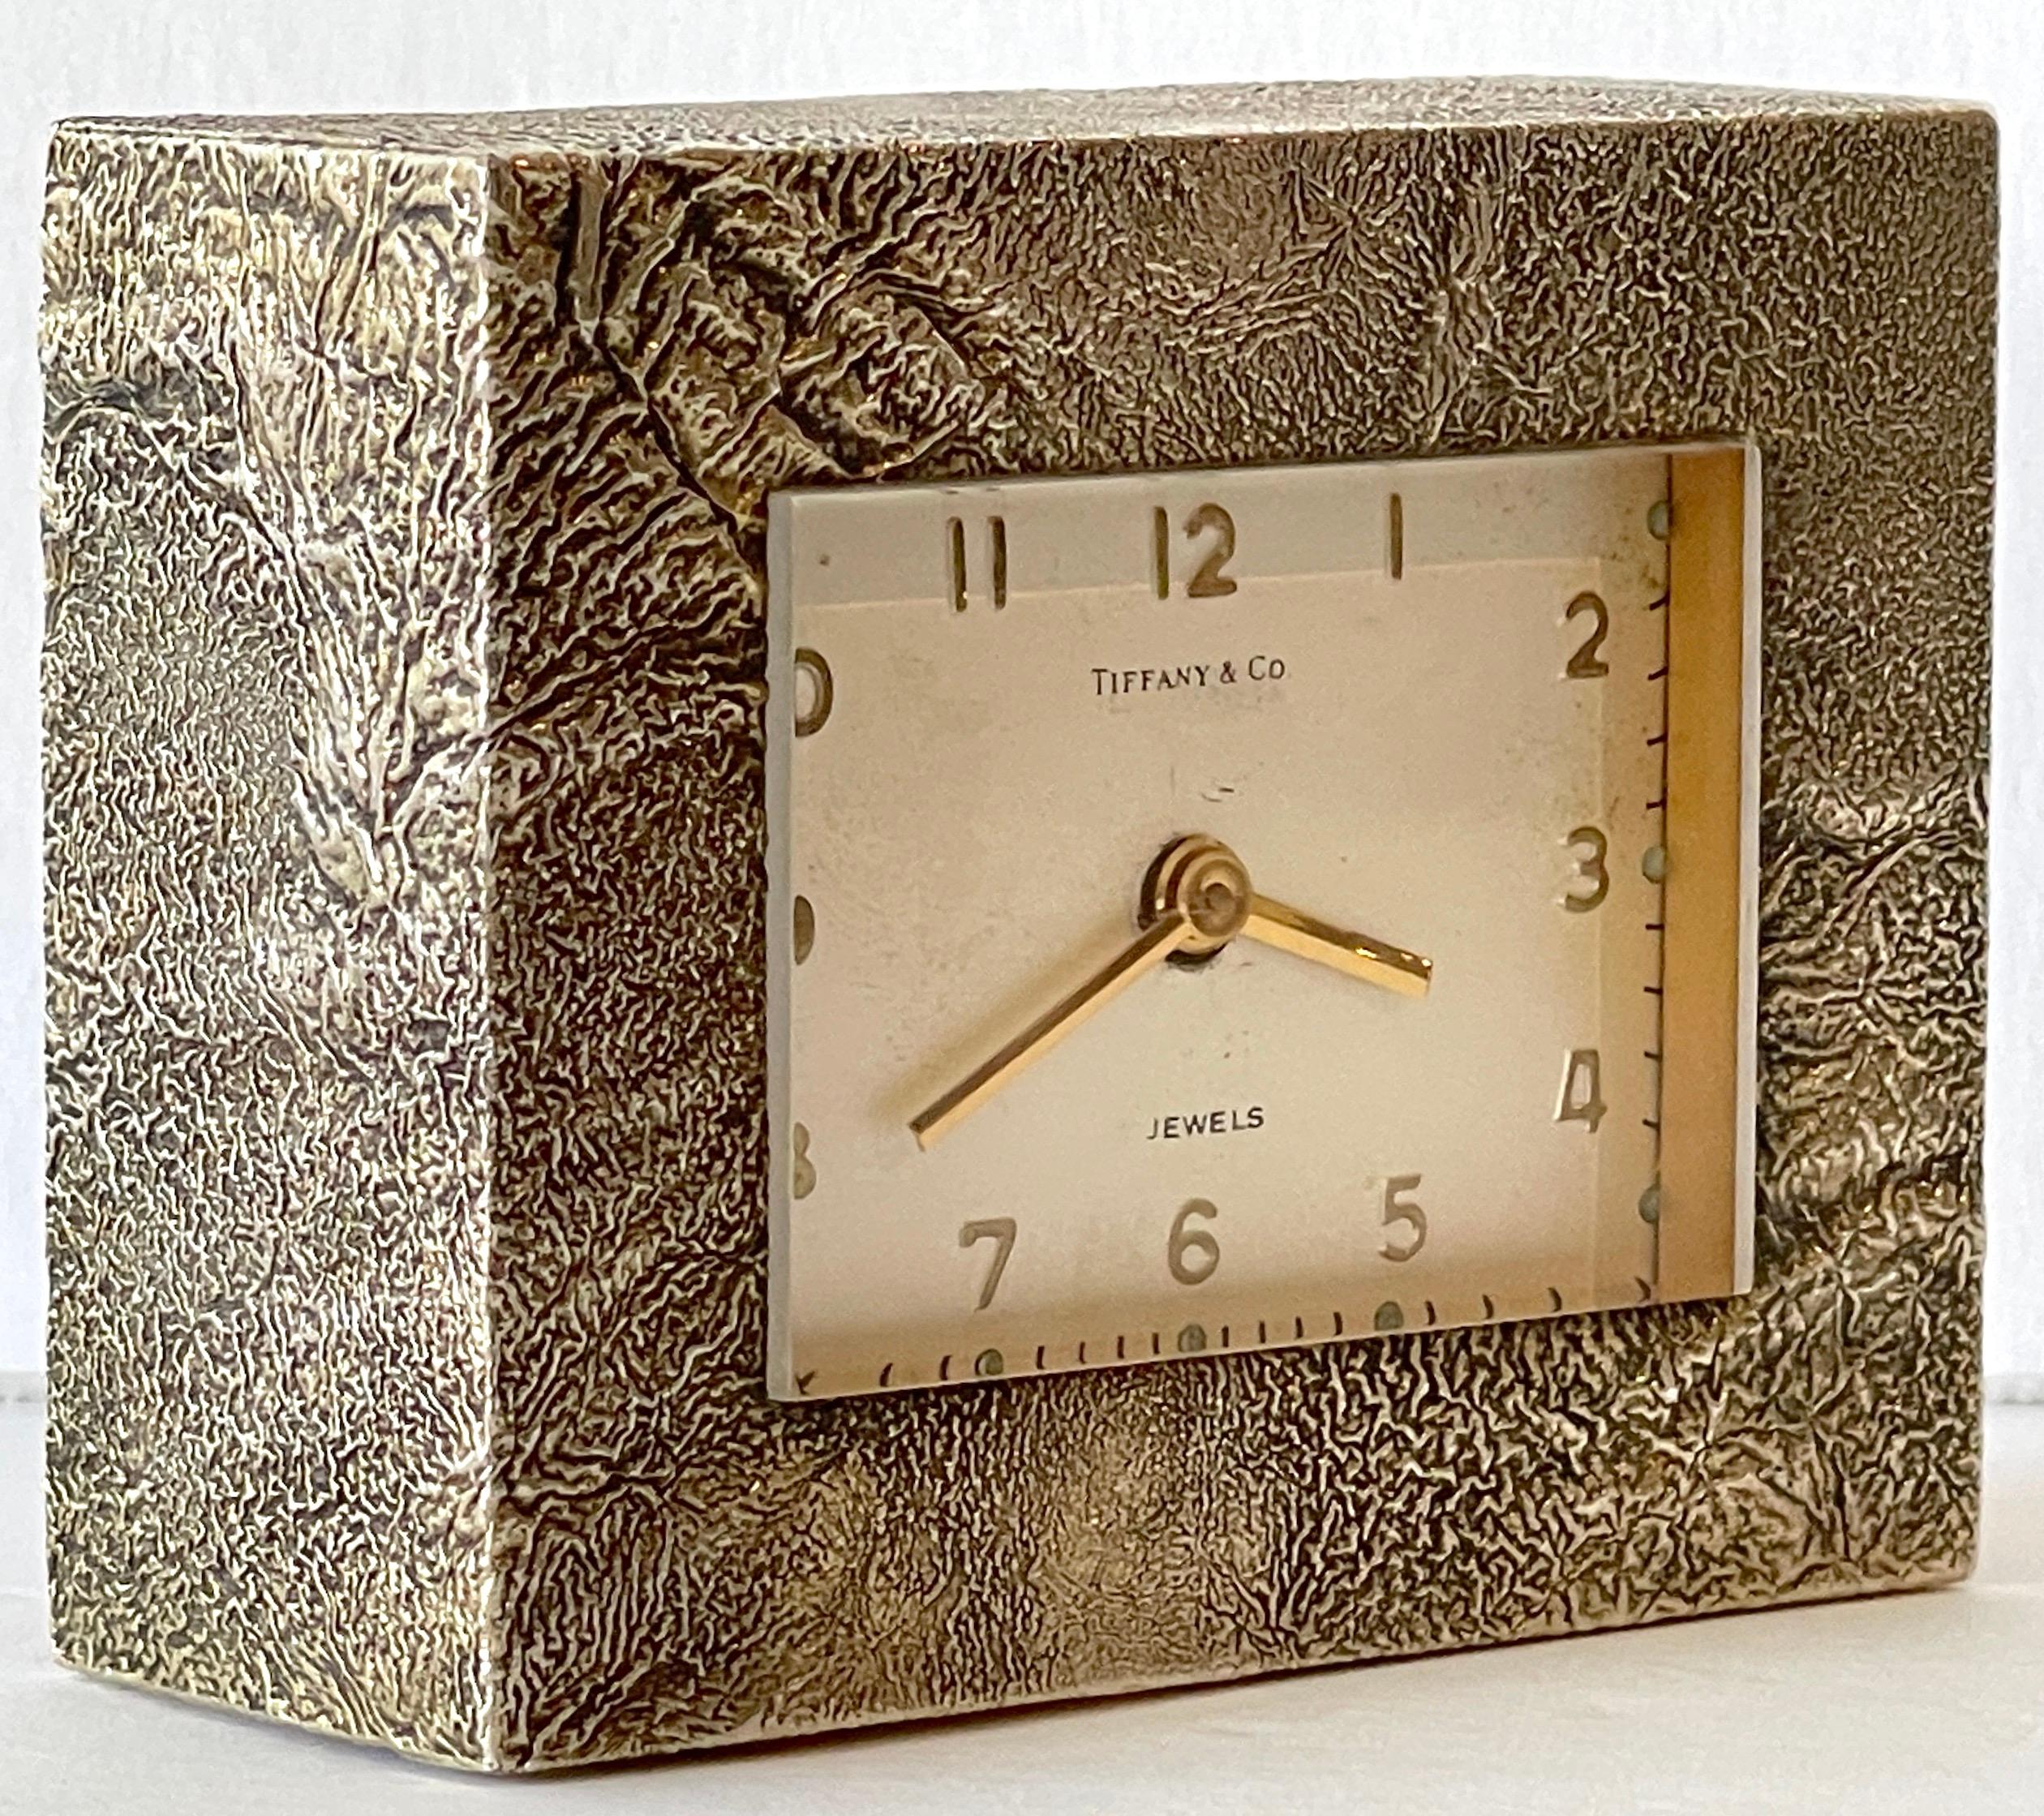 Tiffany & Co. Modern Cast Bronze 'Rockwork' Table Clock, Swiss Jeweled Movement For Sale 4